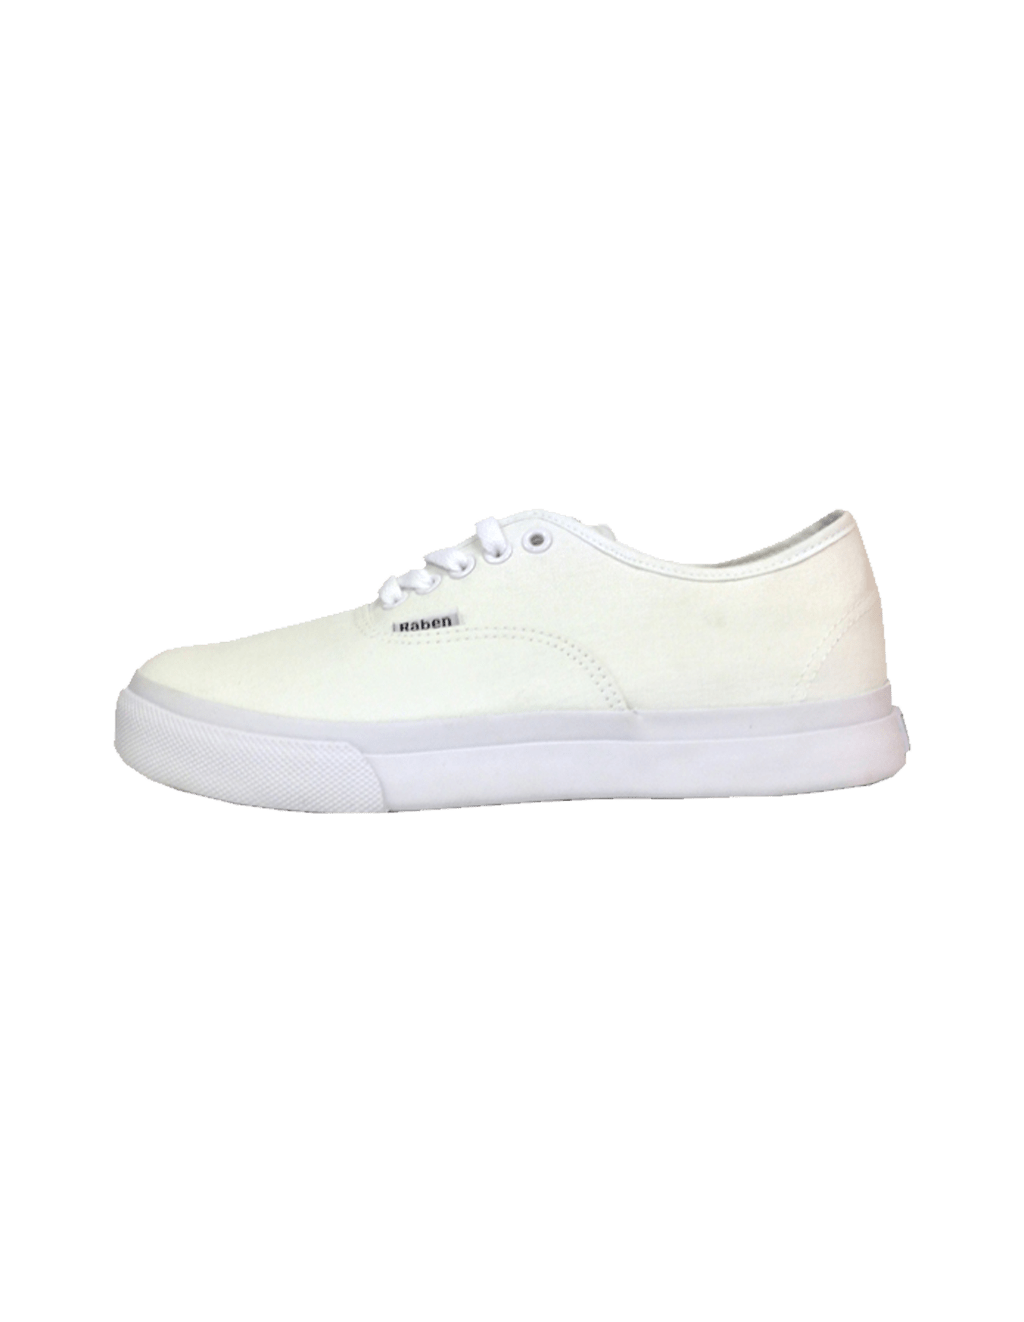 RABEN Canvas Classics Lace Up White - Raben Footwear